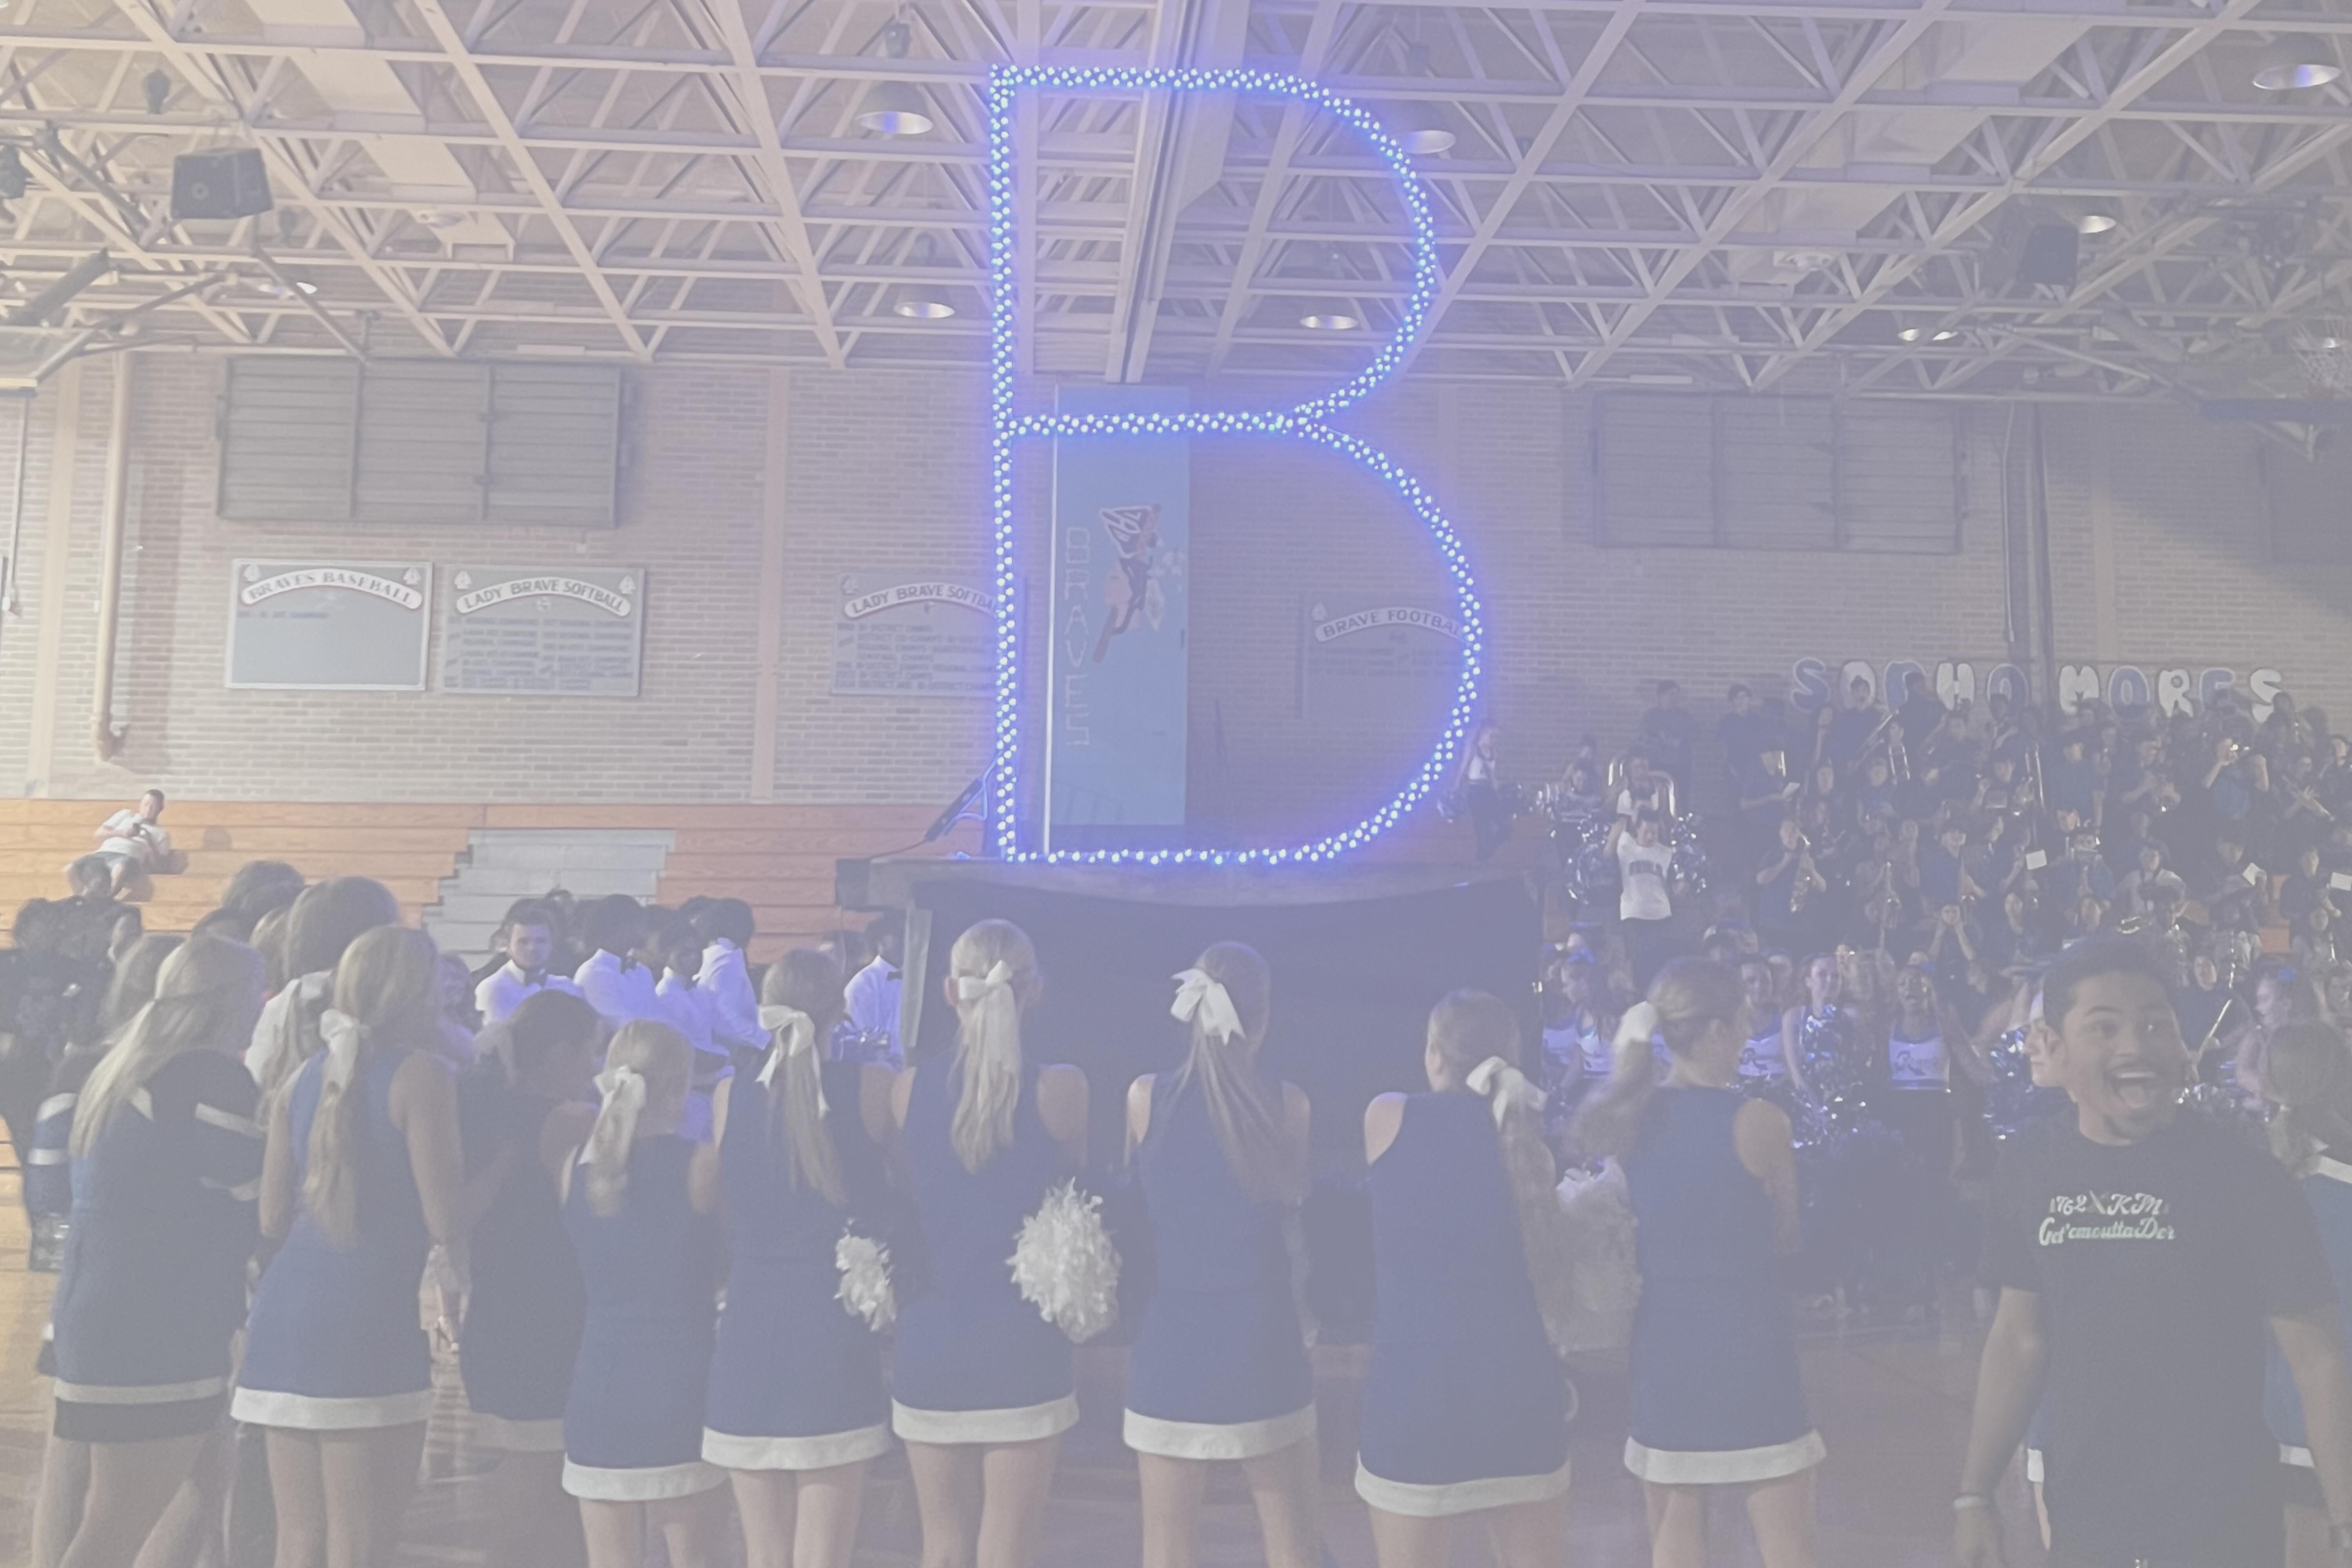 Students surrounding "B"